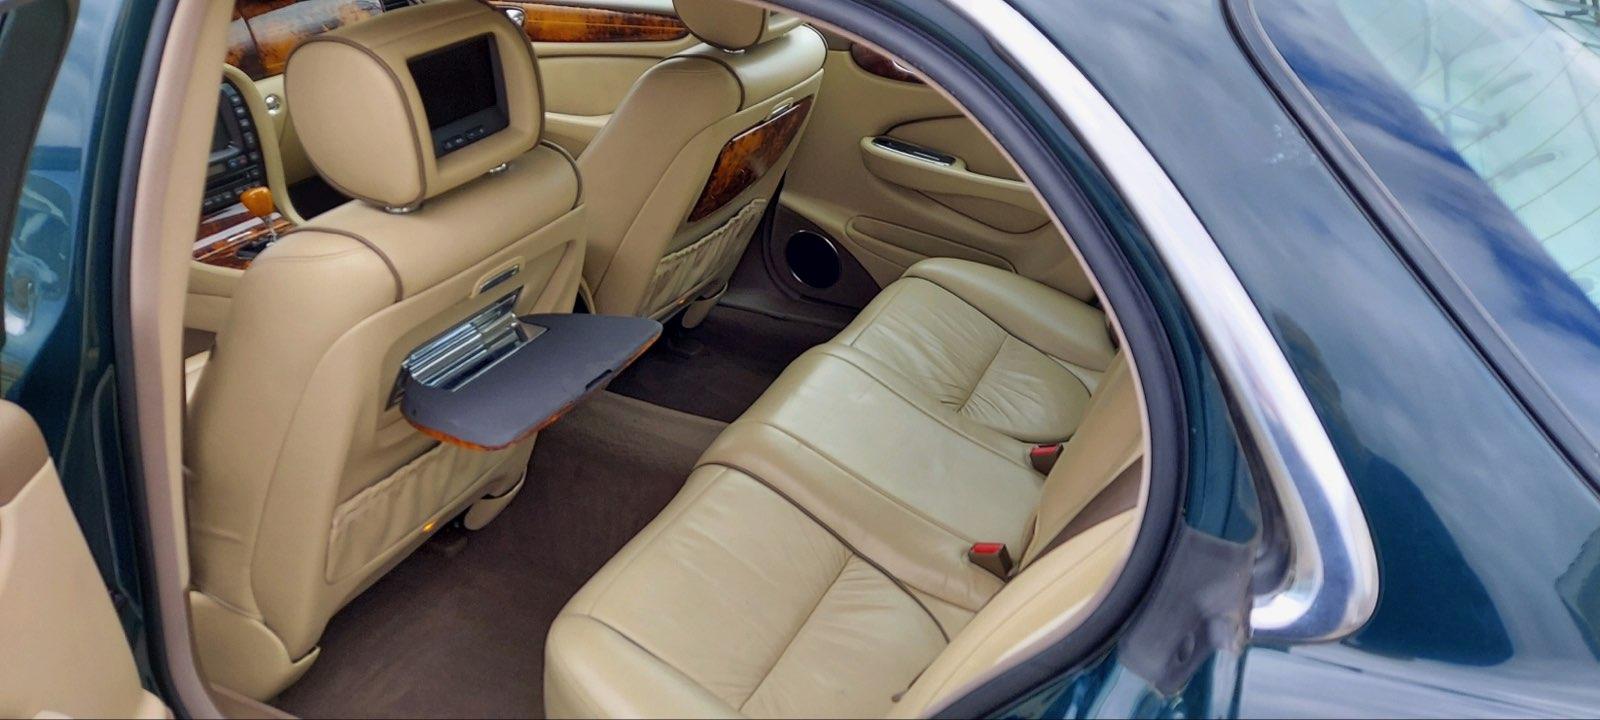 2005 Jaguar XJ8 Vanden Plas Sedan. 4.2 liter V-8 294hp. Loaded with every p